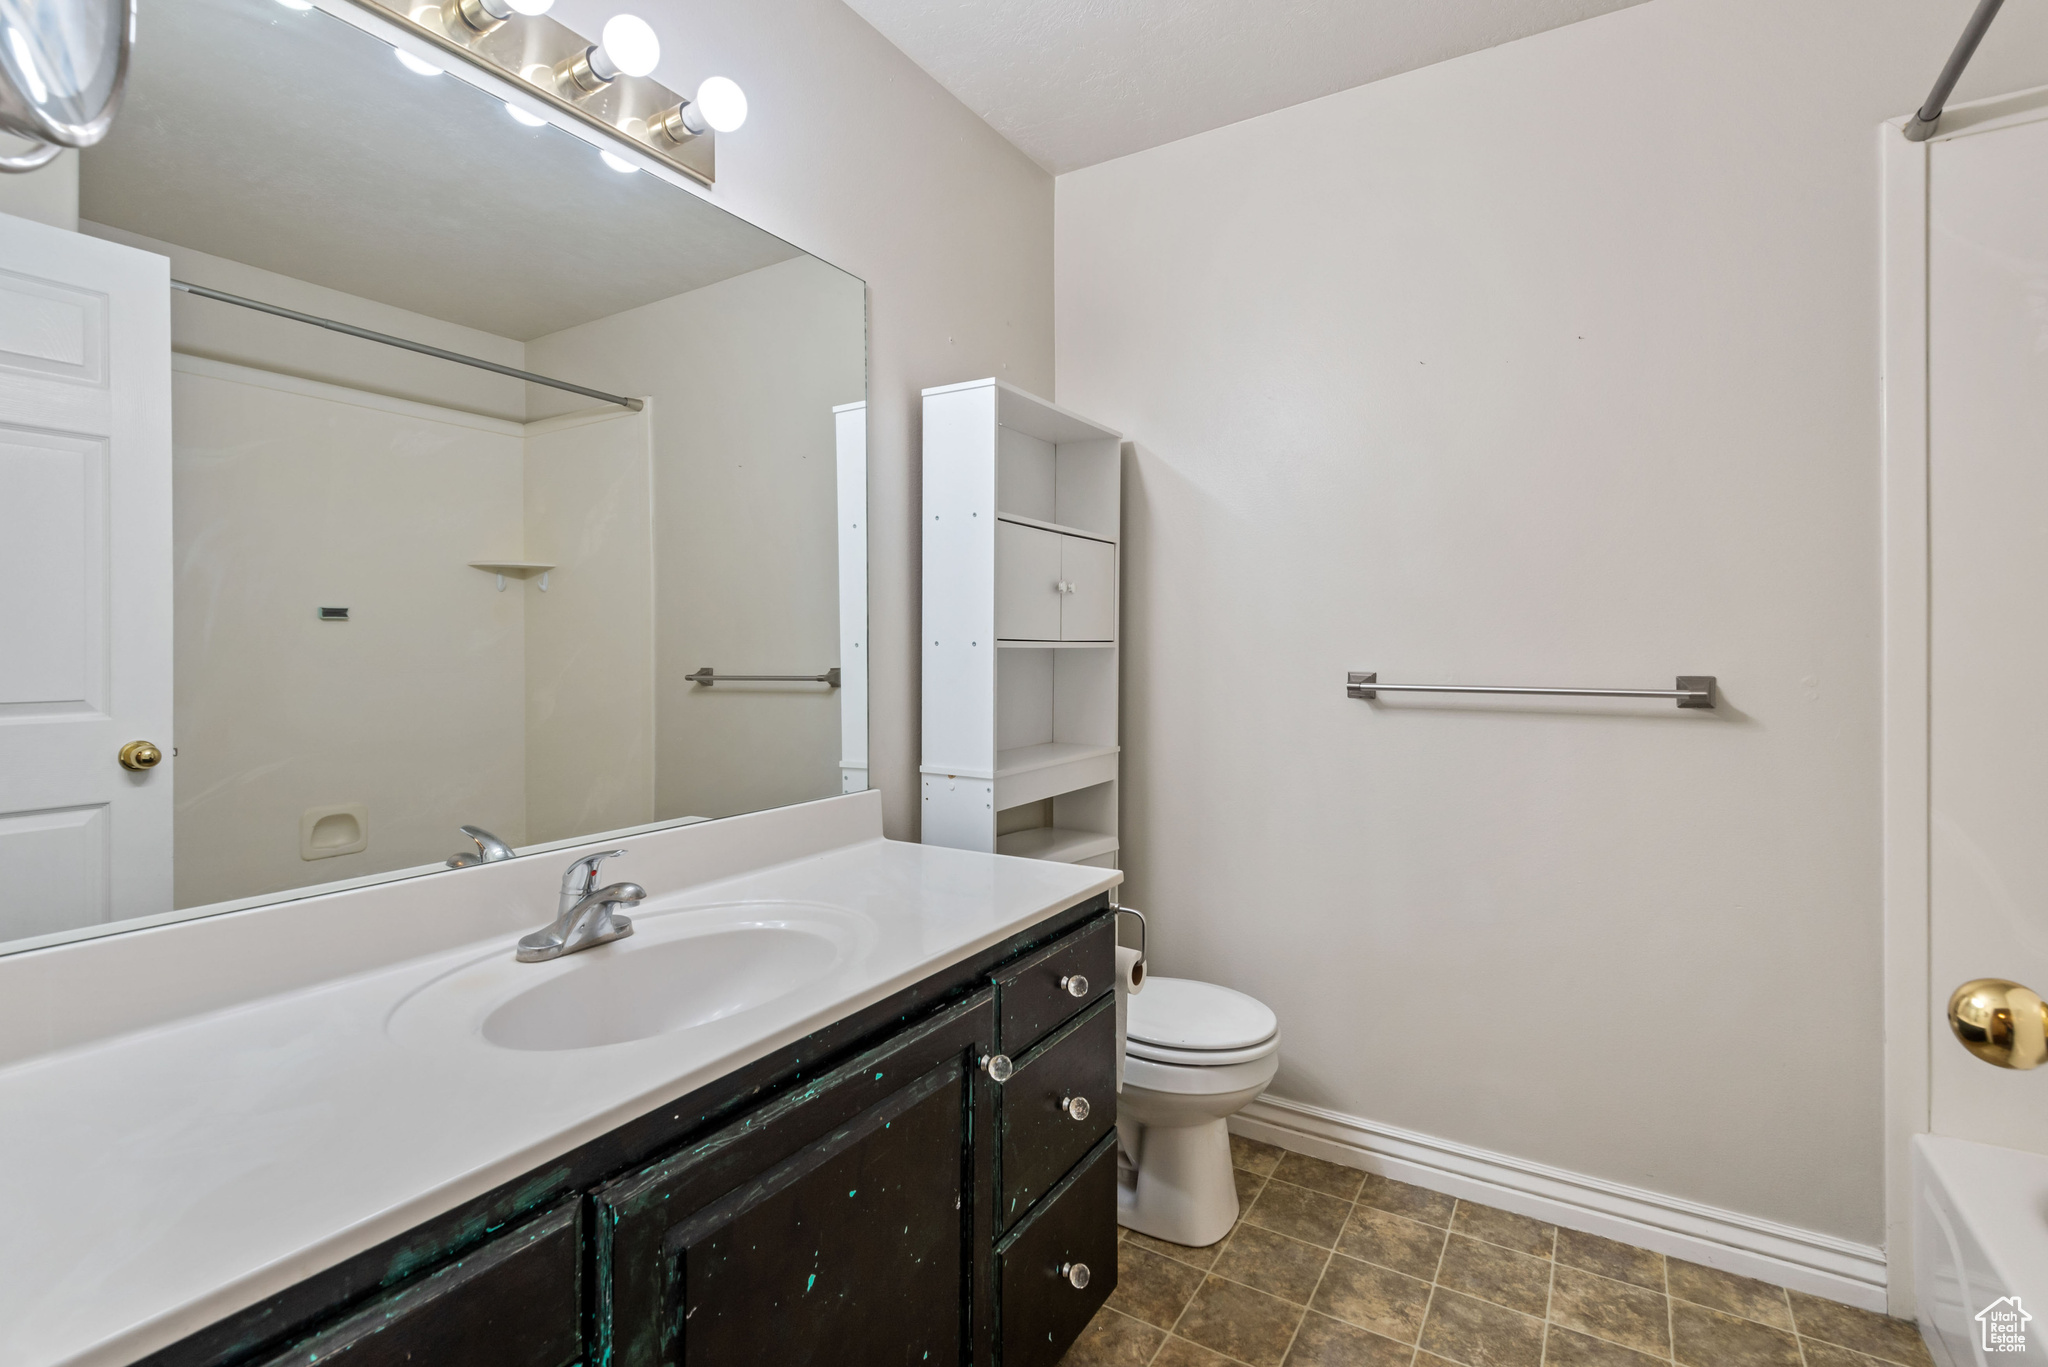 Full bathroom with washtub / shower combination, vanity, tile flooring, and toilet